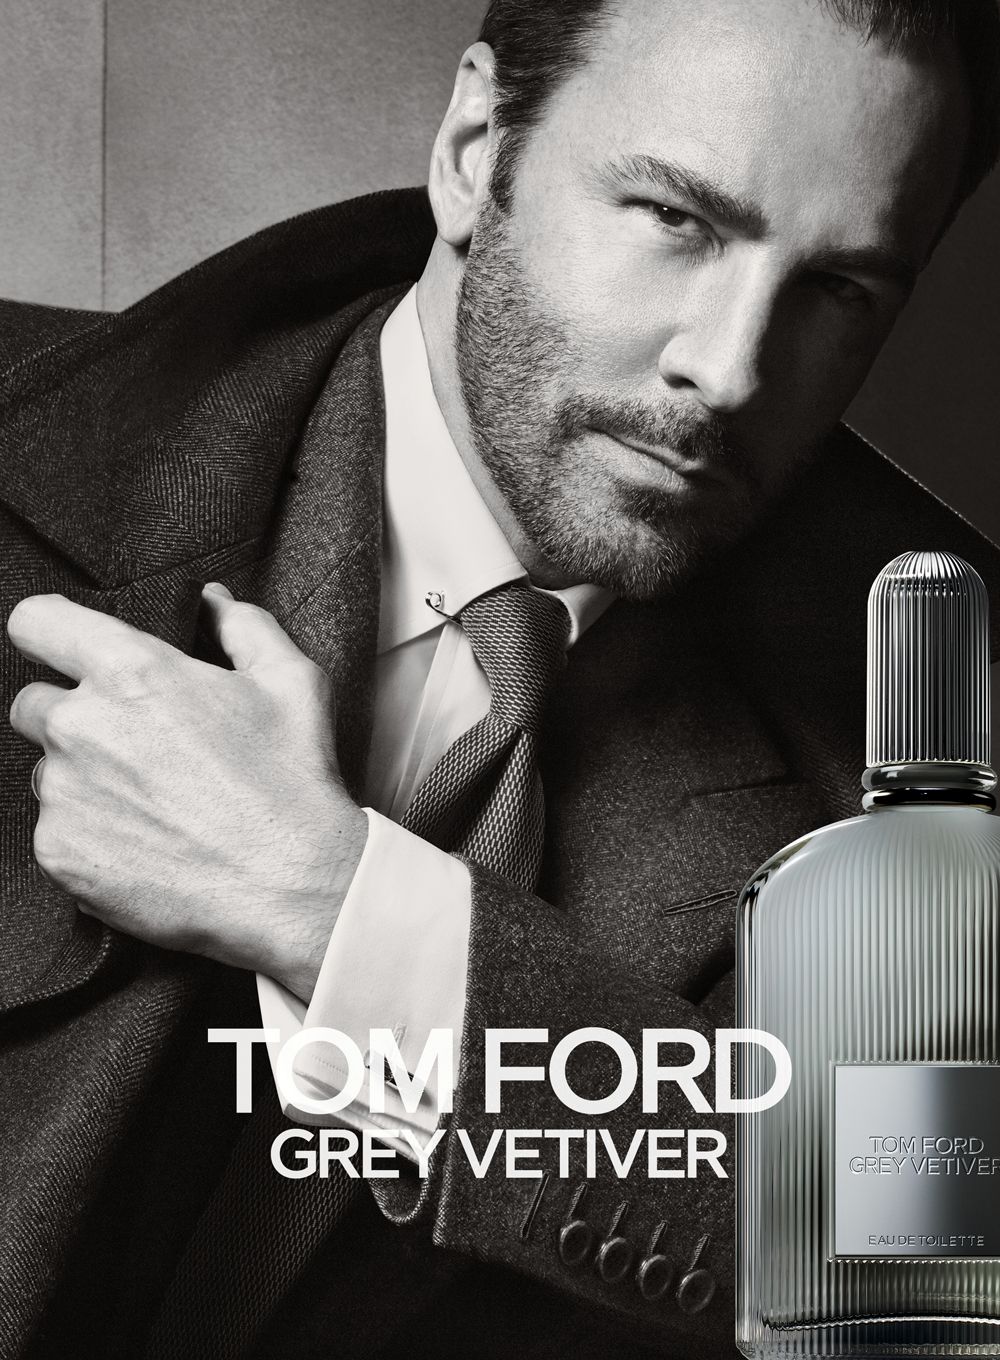 Ford Grey Vetiver Parfum New Fragrances